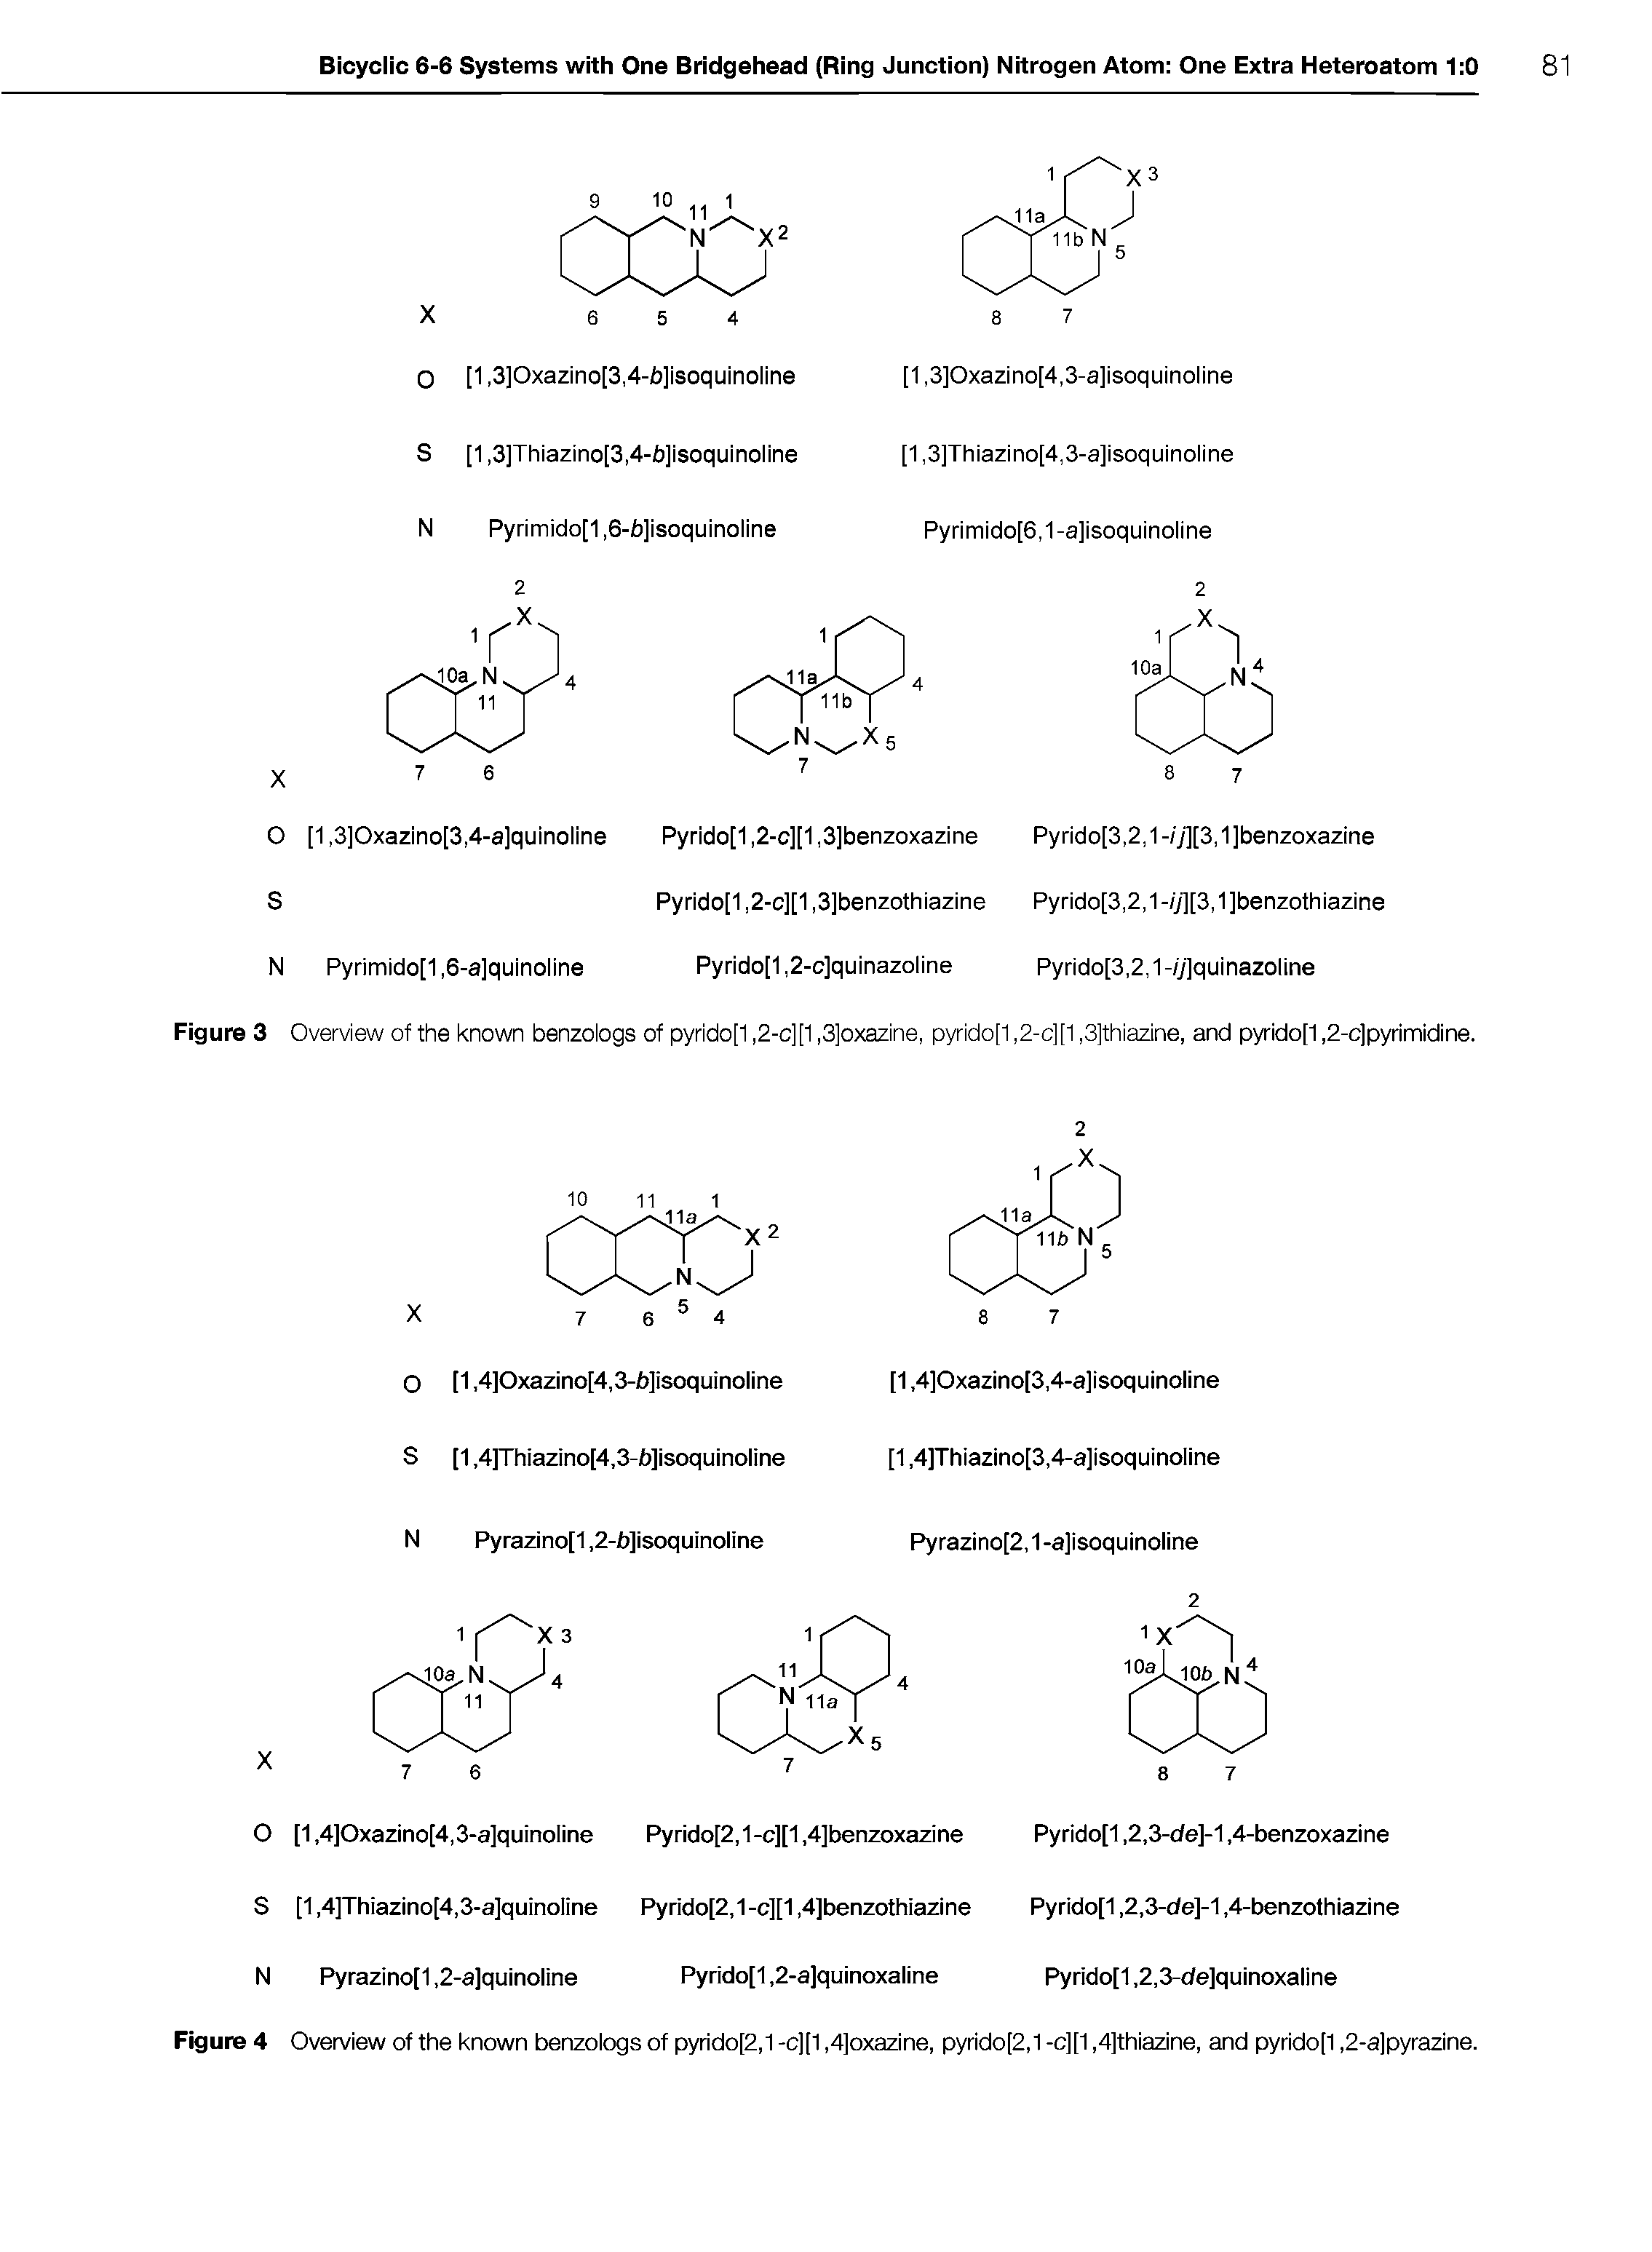 Figure 4 Overview of the known benzologs of pyrido[2,1 -c][1,4]oxazine, pyrido[2,1 -c][1,4]thiazine, and pyrido[1,2-a]pyrazine.